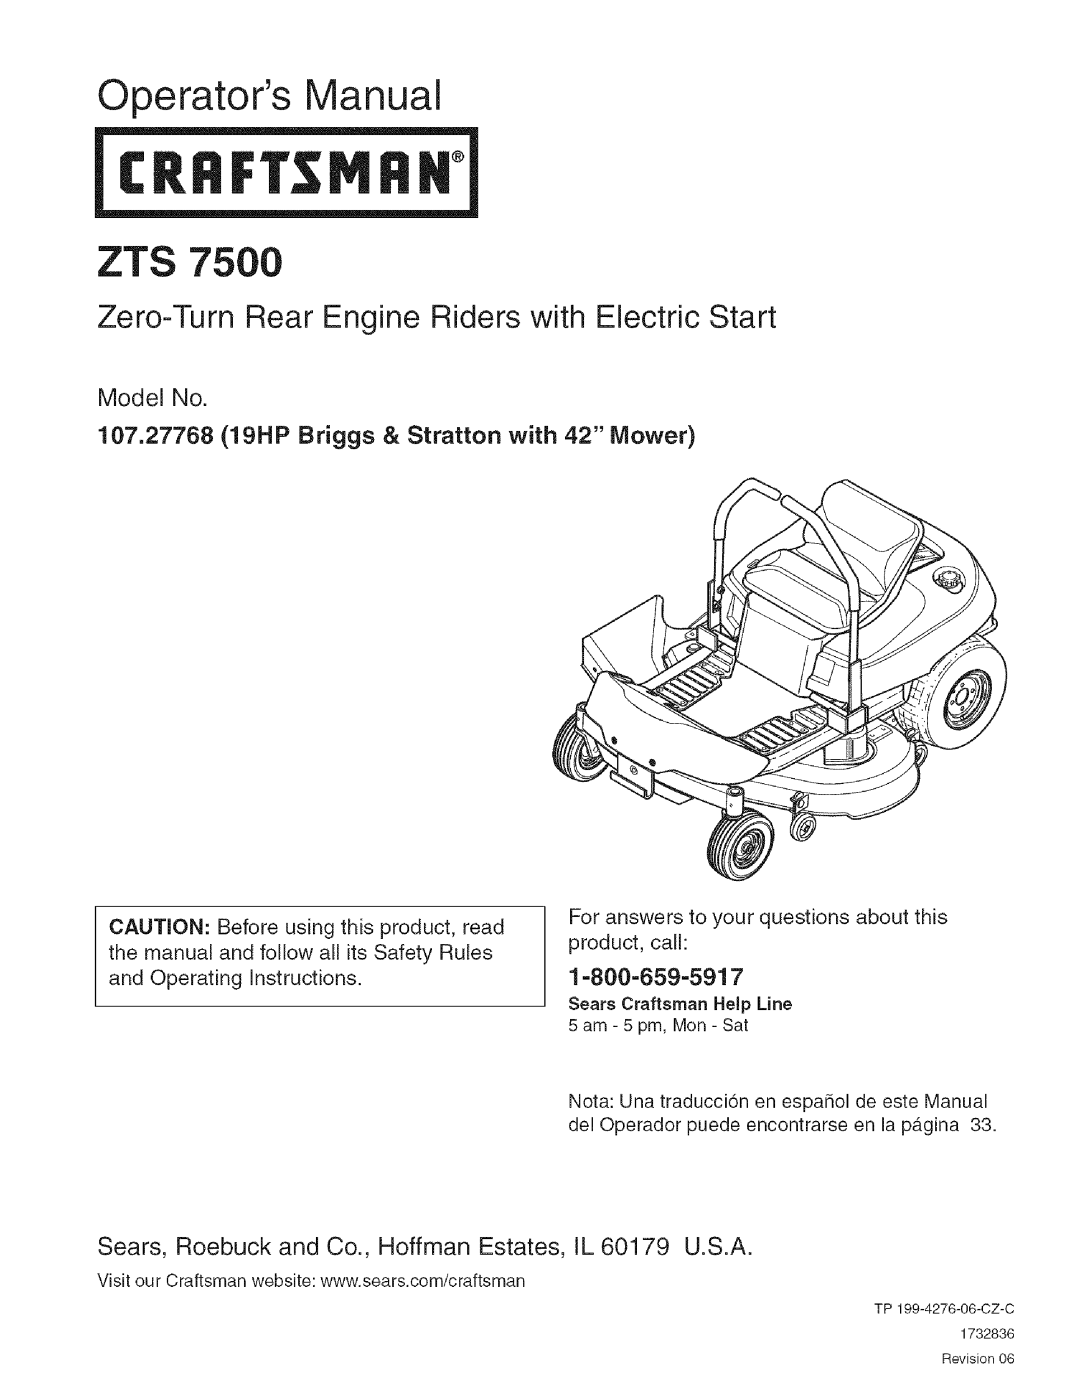 Craftsman 107.27768 manual Operators Manual, Zero-TurnRear Engine Riders with Electric Start, Model No 